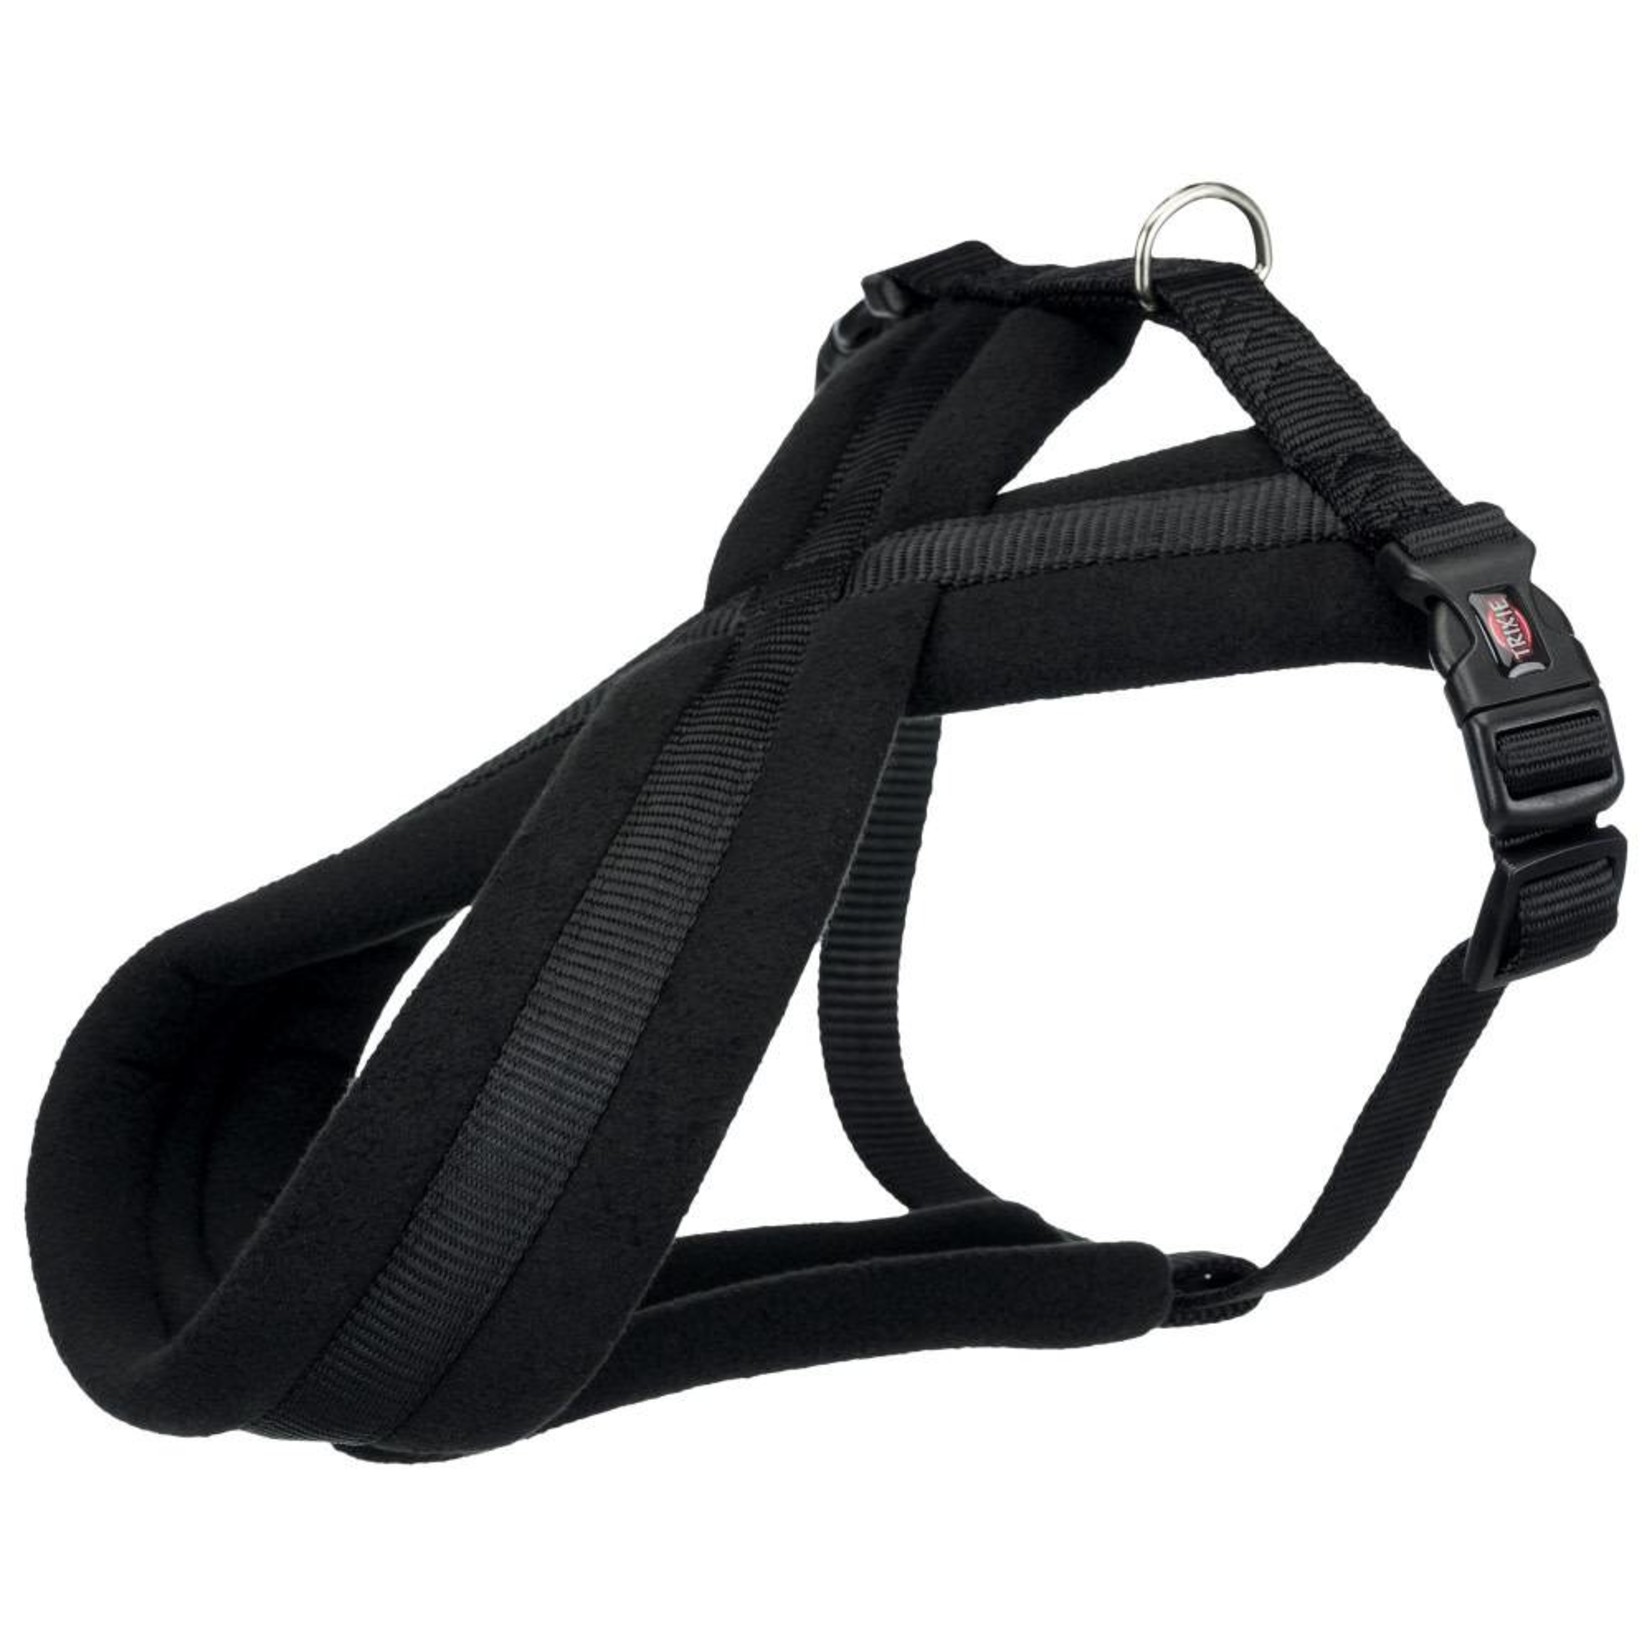 Trixie Premium Touring Padded Dog Harness, Black